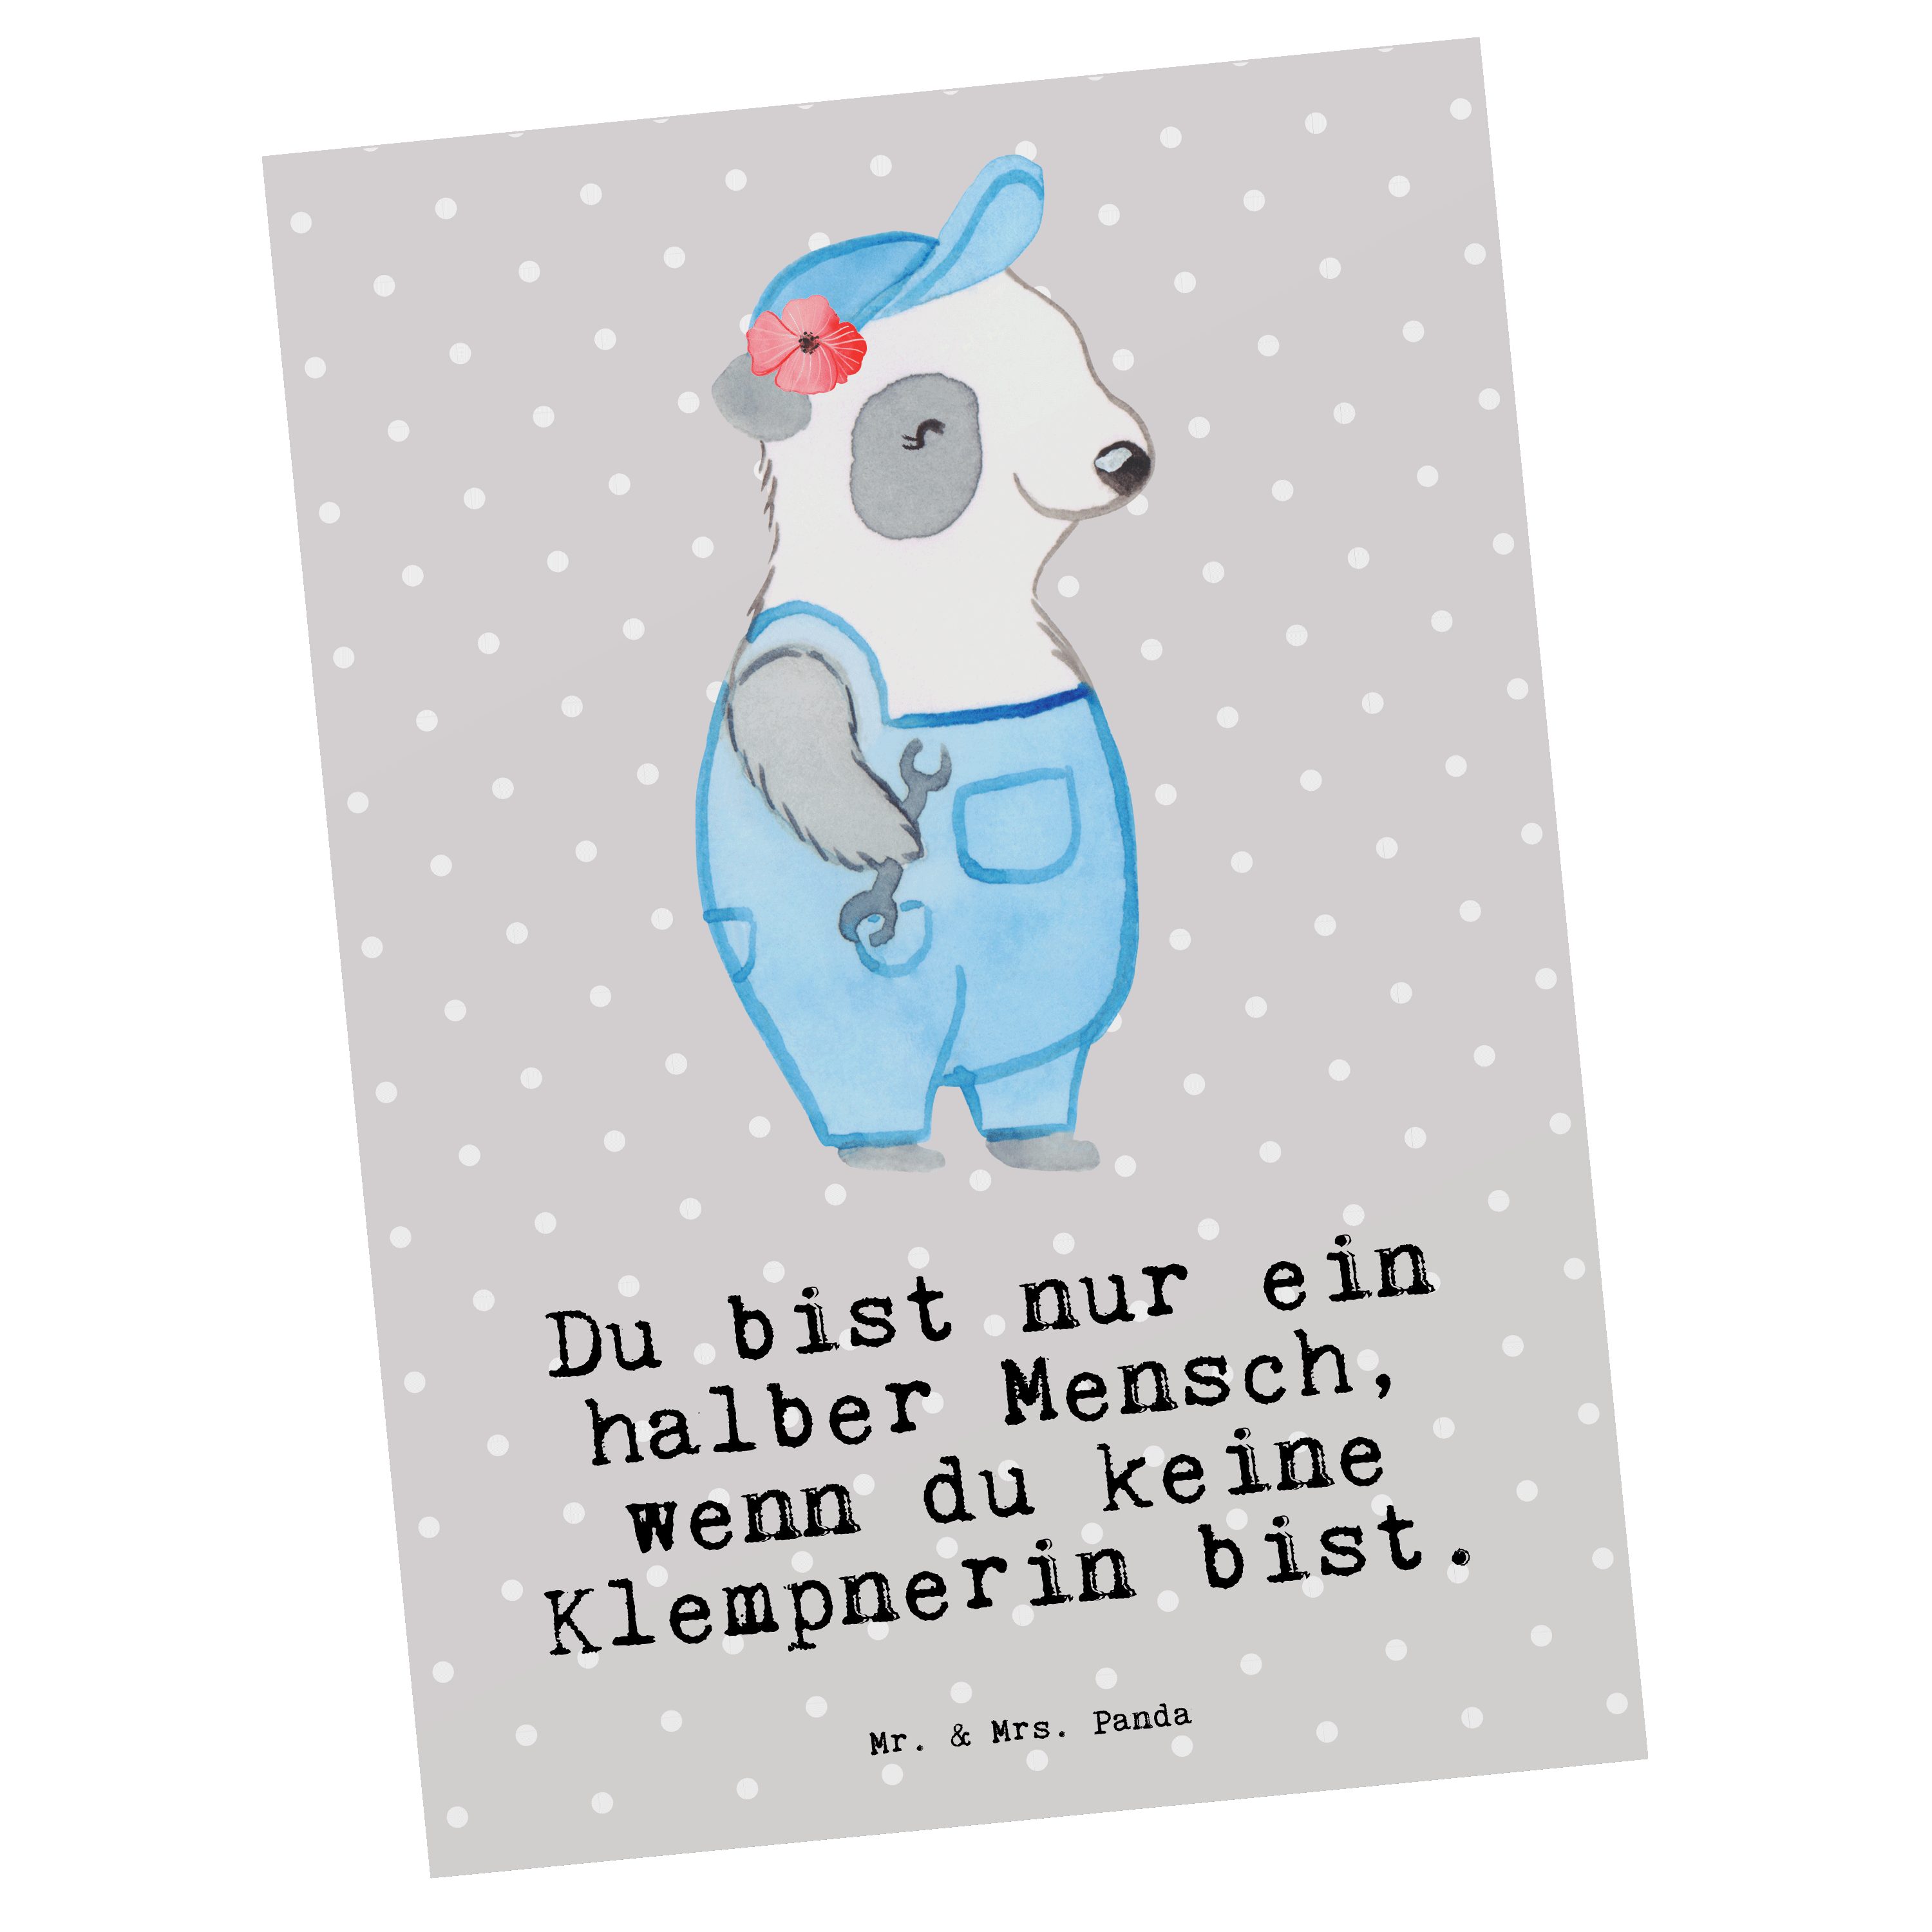 Mr. & Mrs. Panda Postkarte Klempnerin mit Herz - Grau Pastell - Geschenk, Grußkarte, Dankeskarte